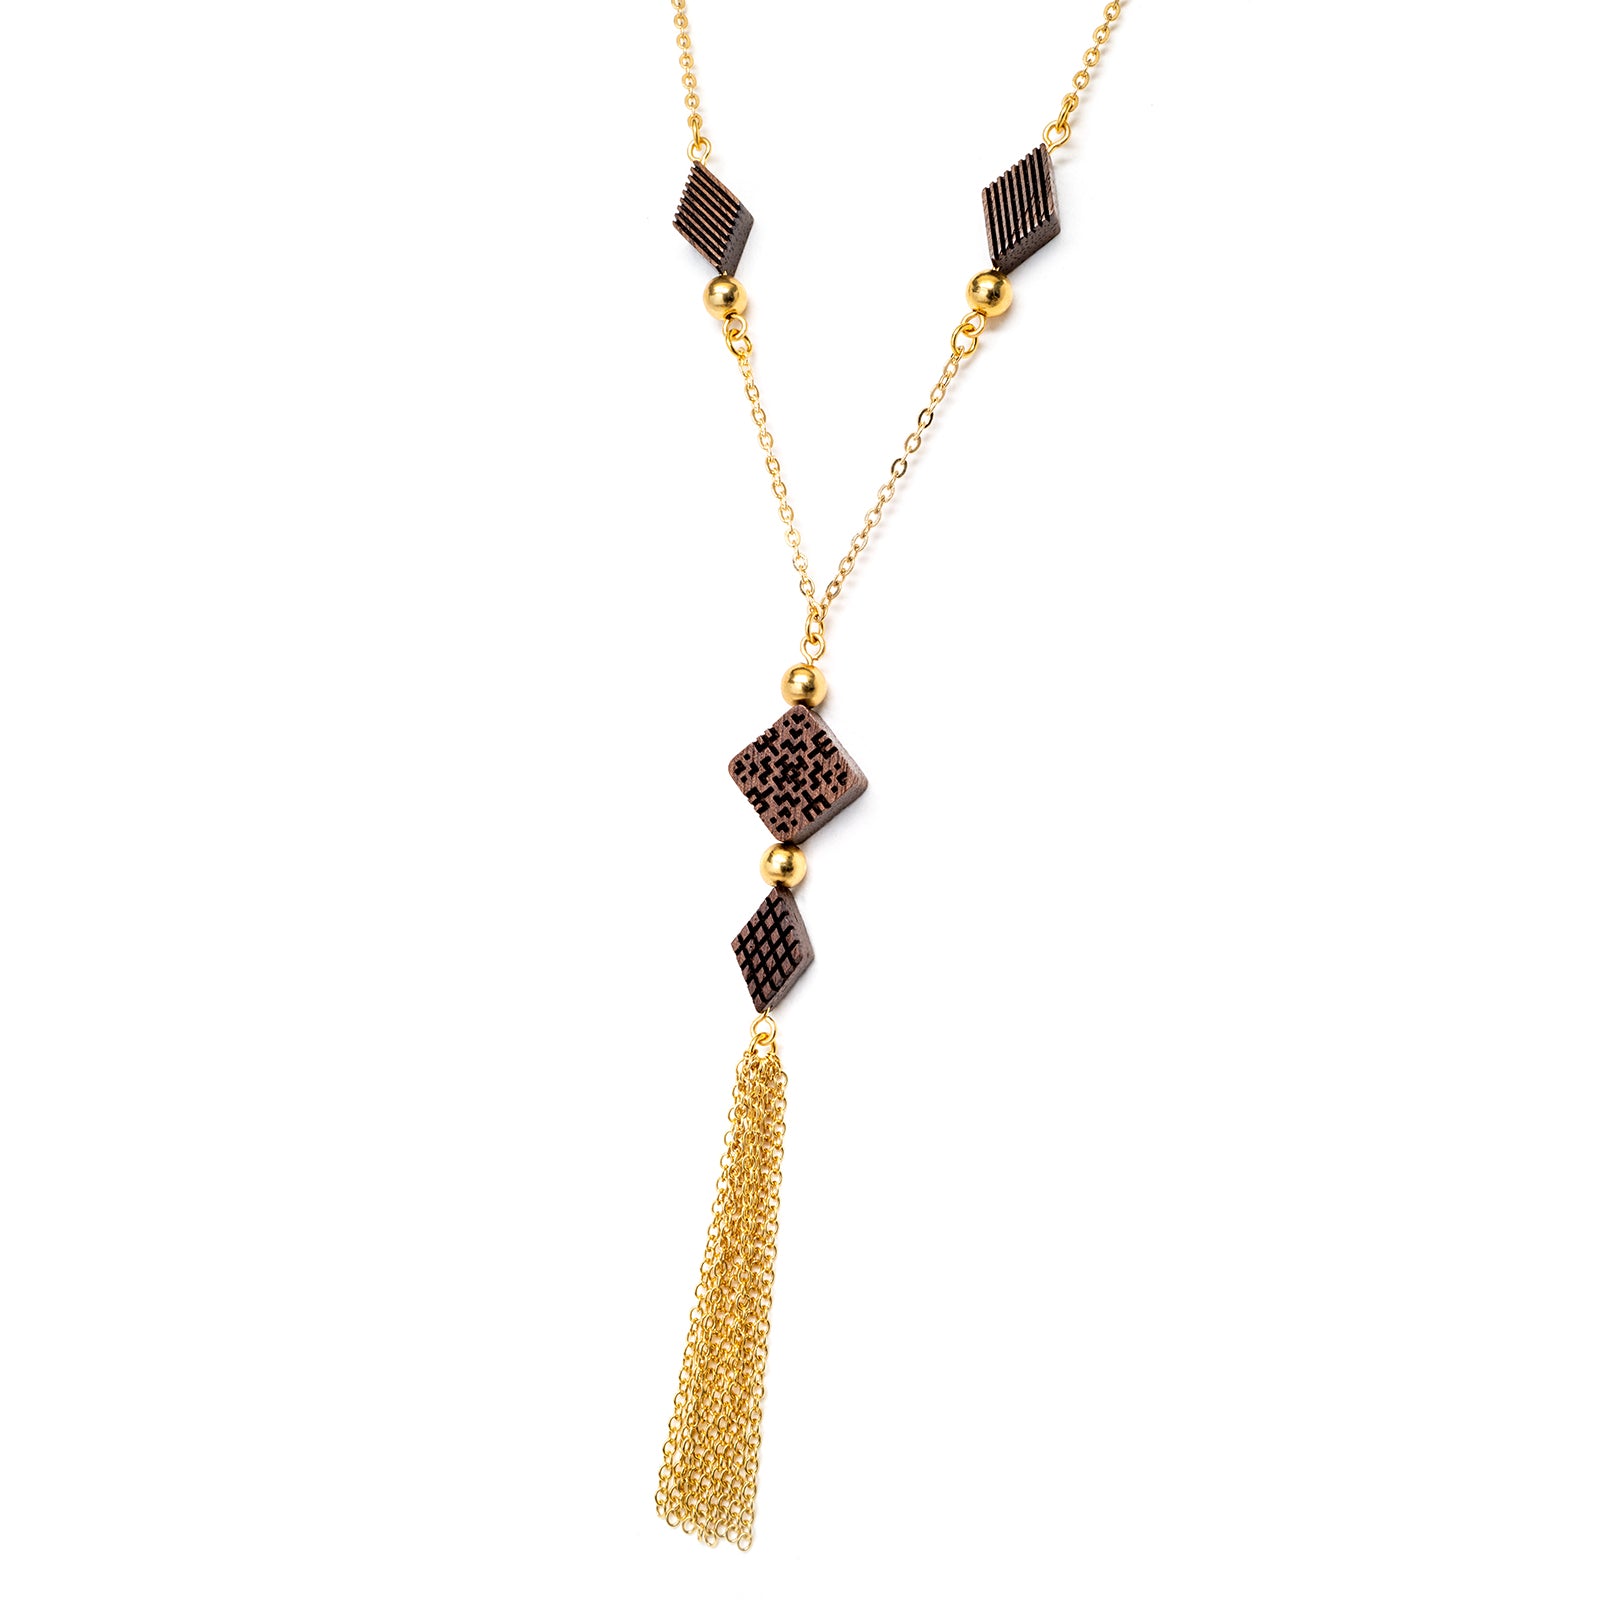 Wooden Beads Tassel necklace, Wooden necklace from WENWEN designs